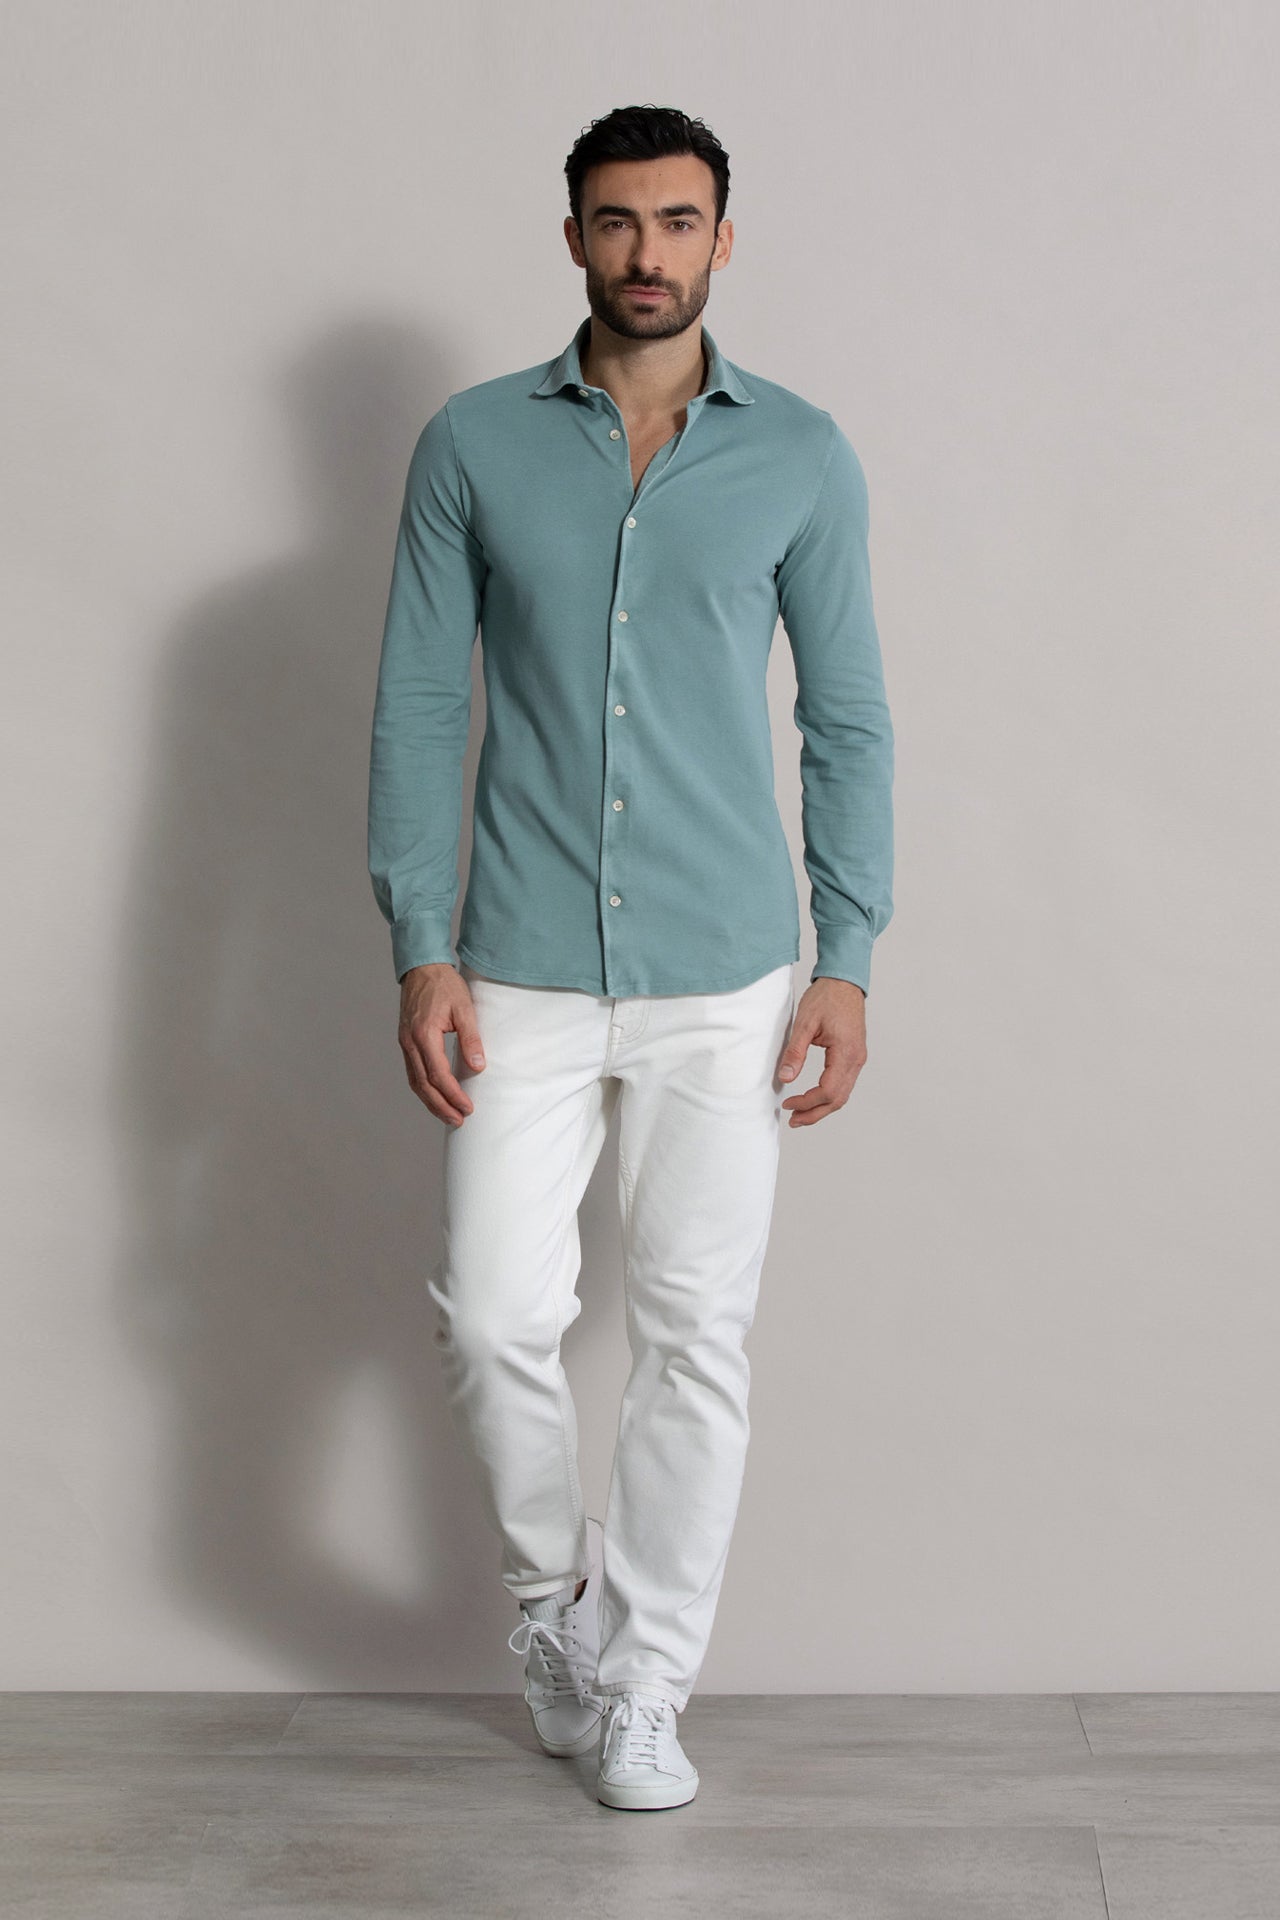 Designer shirt in organic cotton: sea green - front view